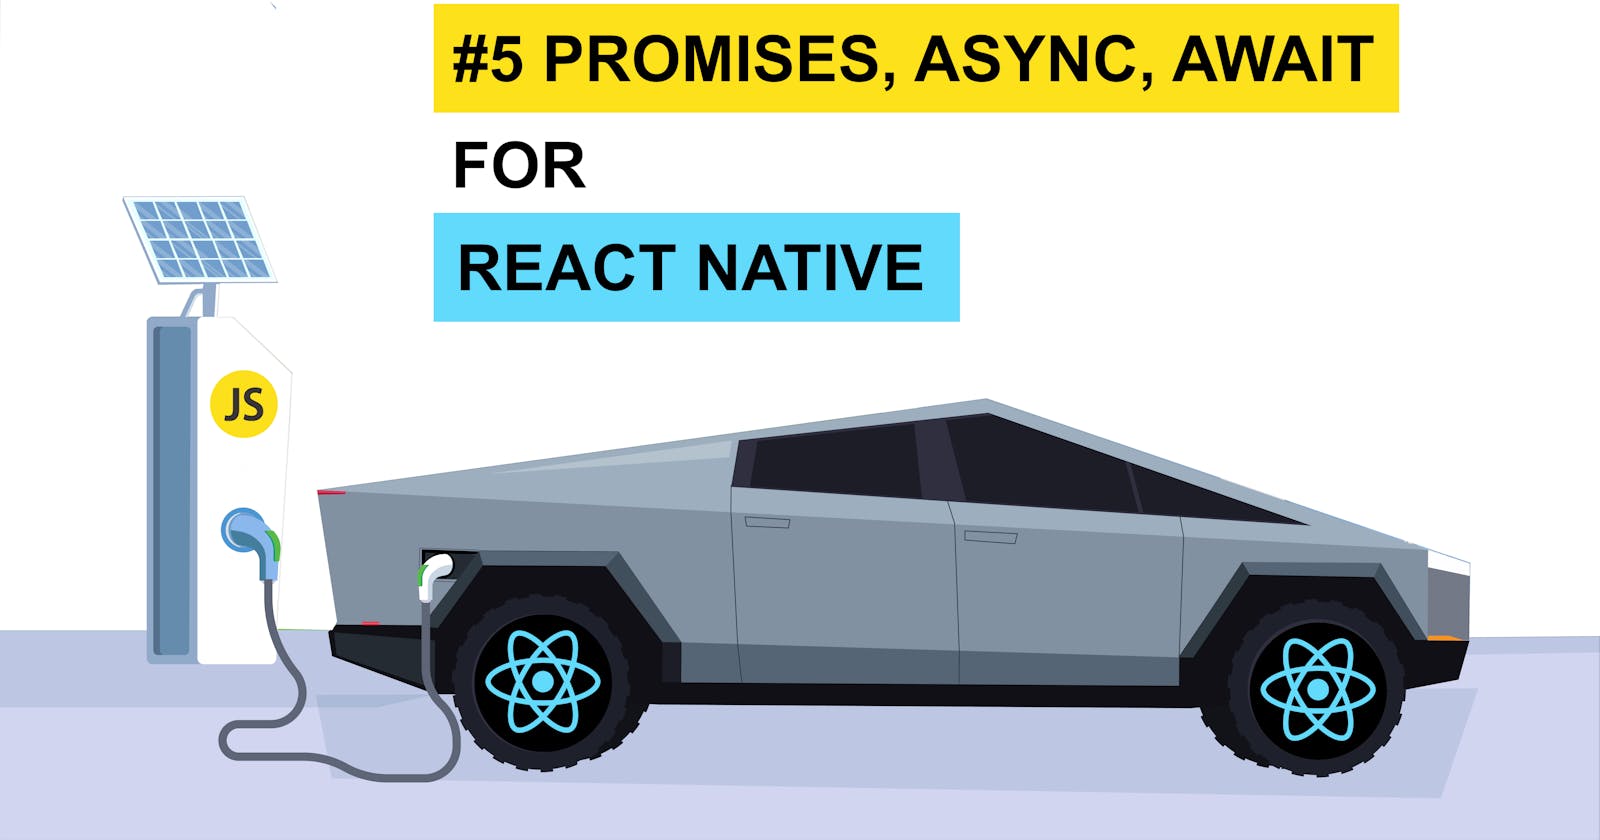 JavaScript Essentials for React Native - #5 Promises, async, await